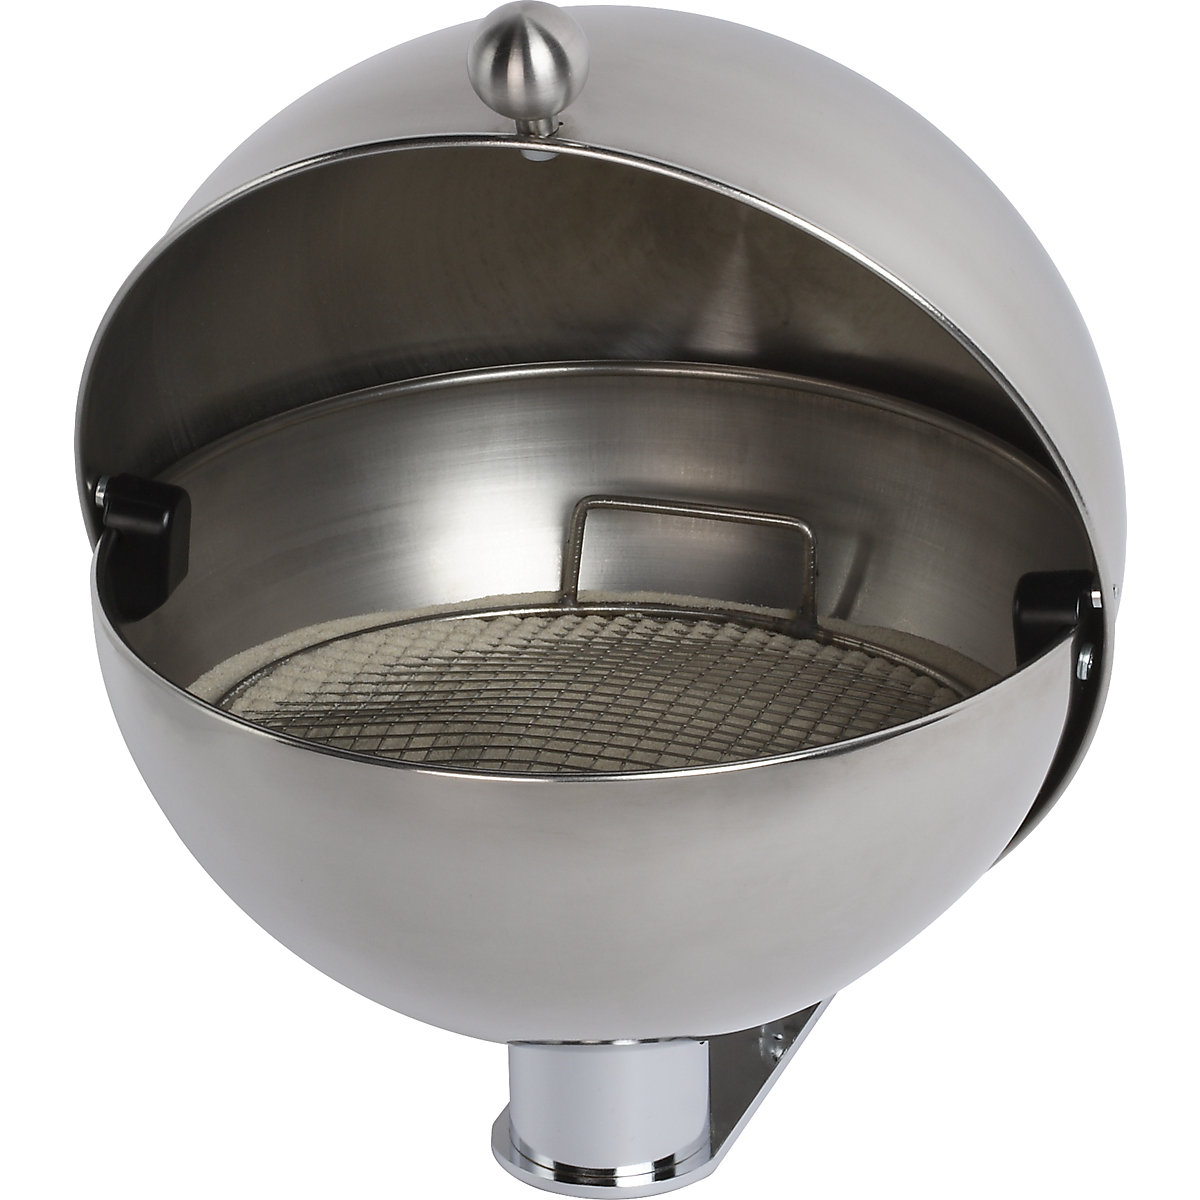 Spherical wall ashtray made of stainless steel - VAR